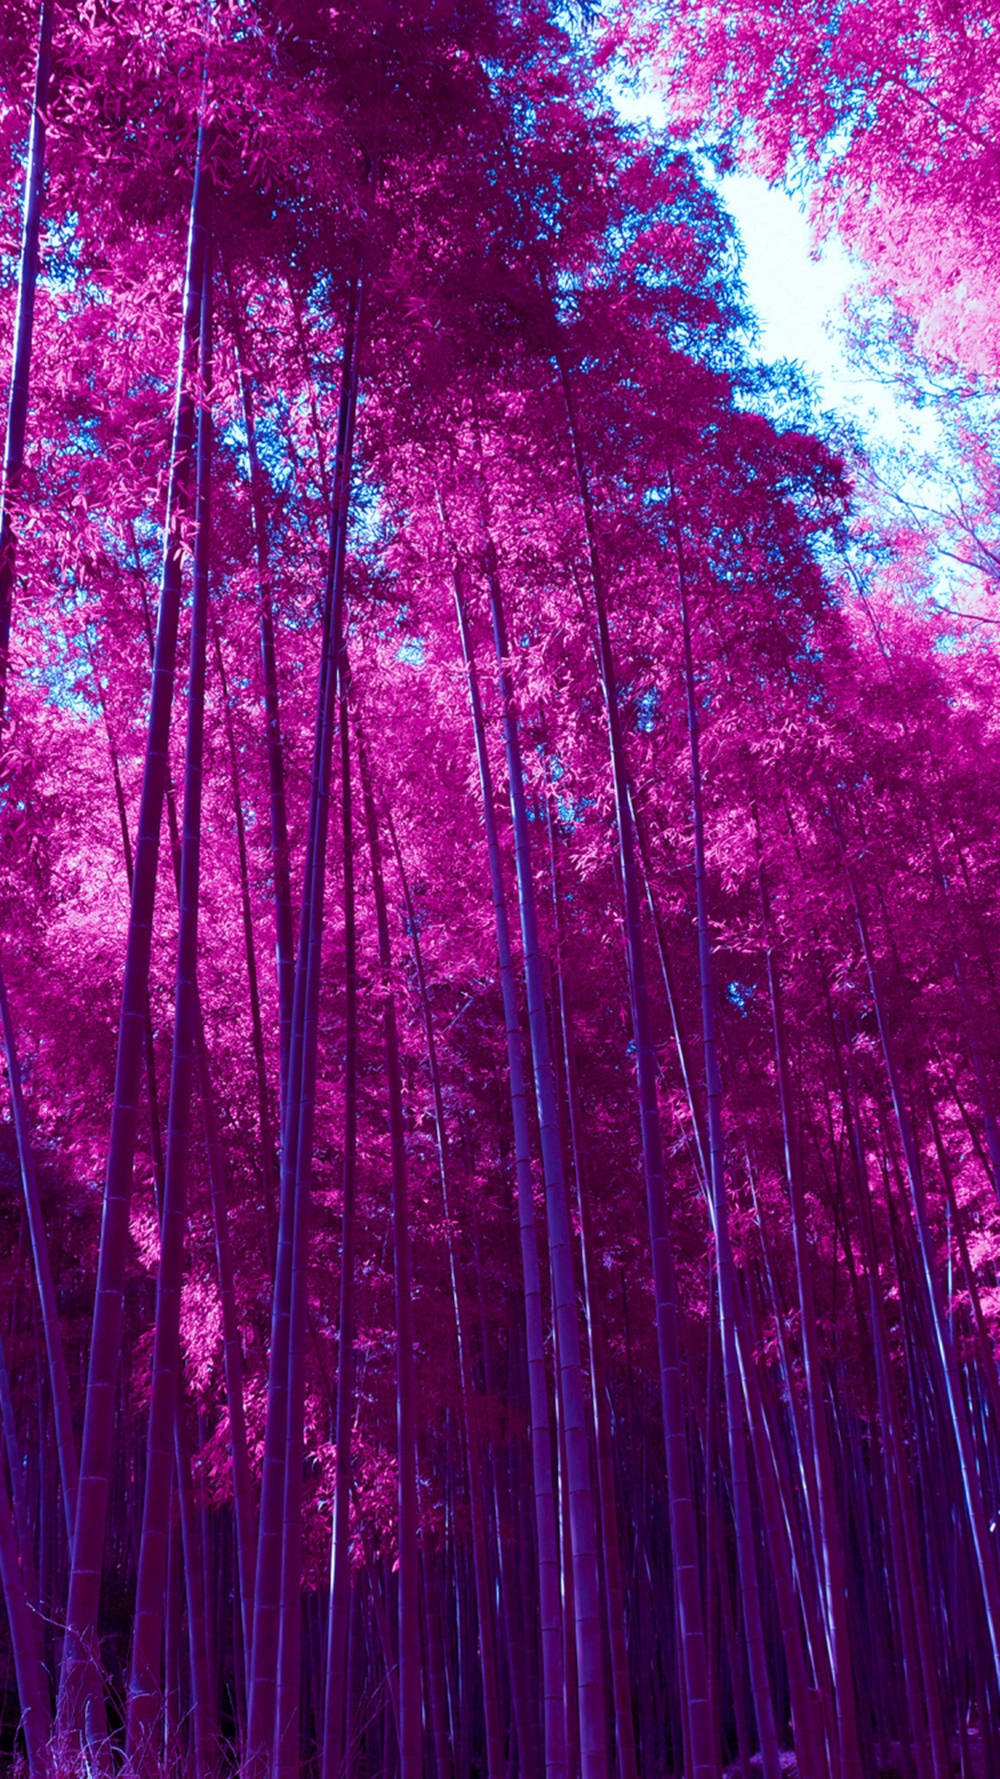 Pink Bamboo Grove Iphone